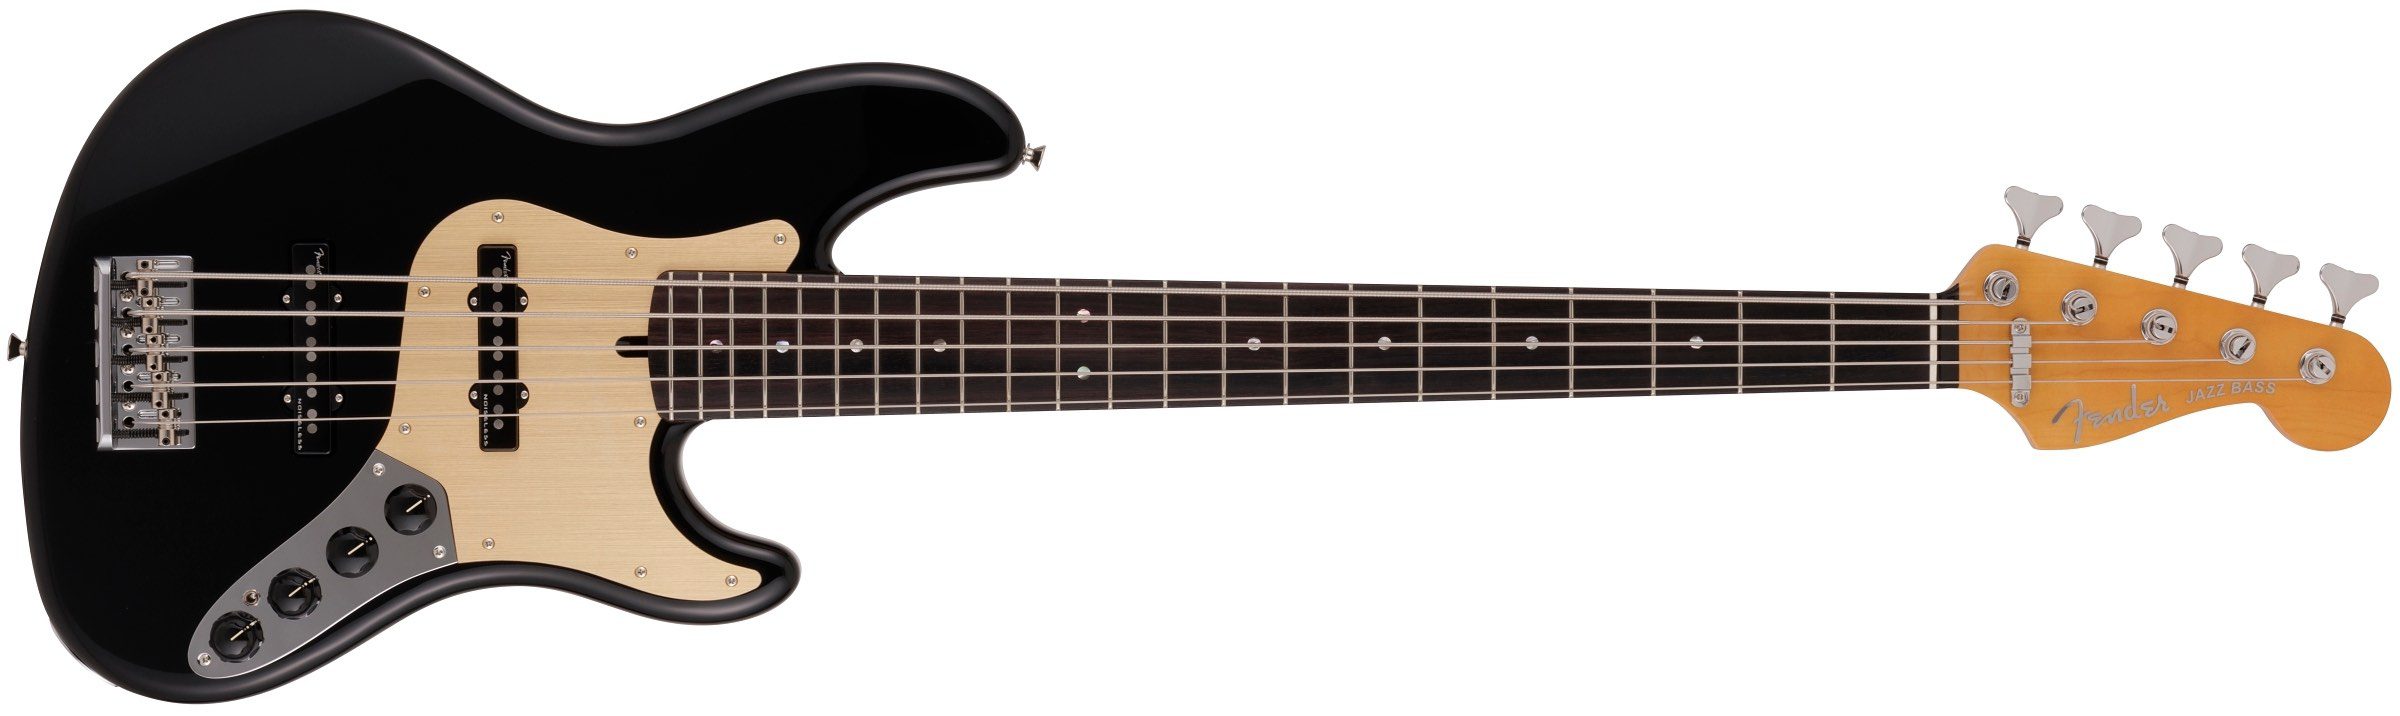 Fender Japan Deluxe Jazz Bass V Kazuki Arai Edition in Black